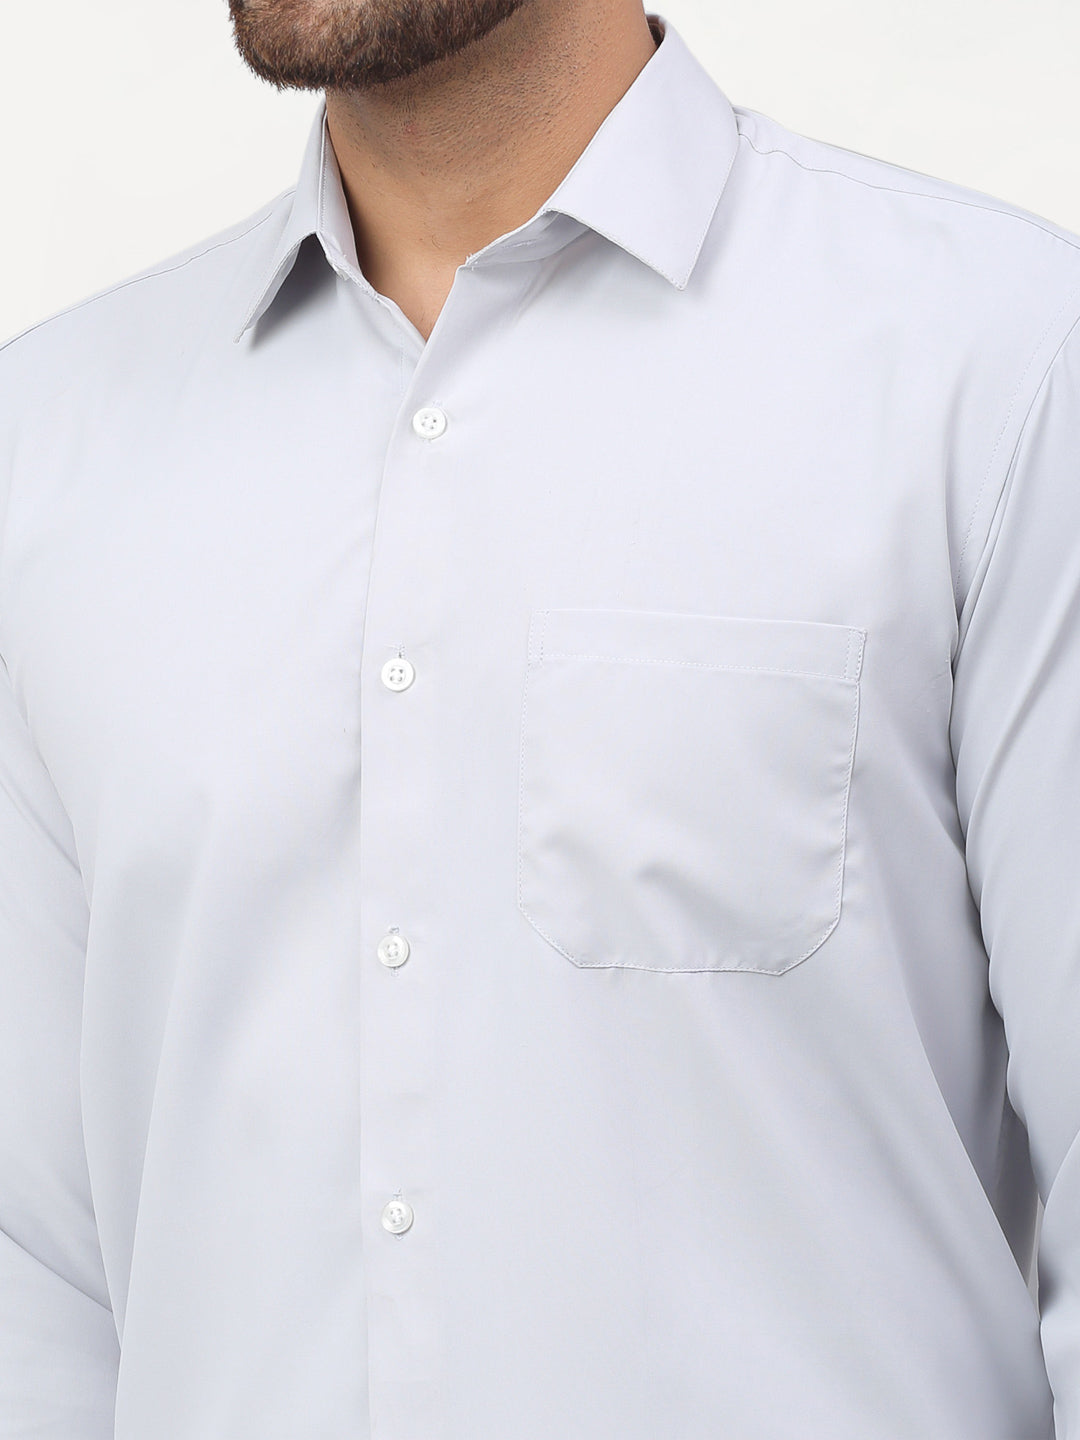 Men's Silver Solid Formal Shirts ( SF 777Steel-Grey ) - Jainish